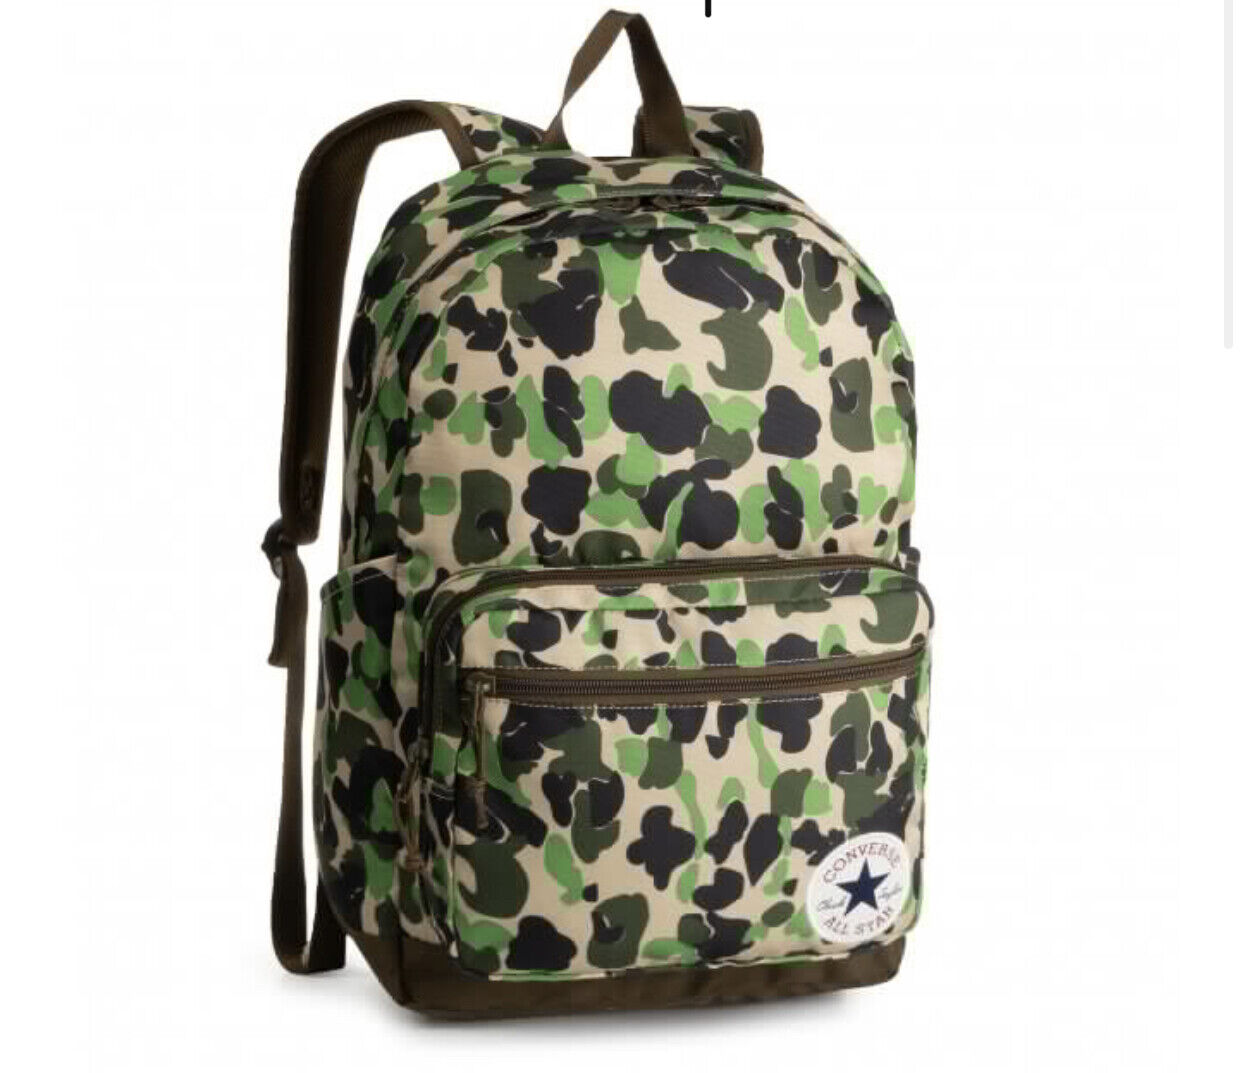 Converse GO 2 Backpack Camo Green Unisex Khaki Green Military 10017272-a04  | eBay